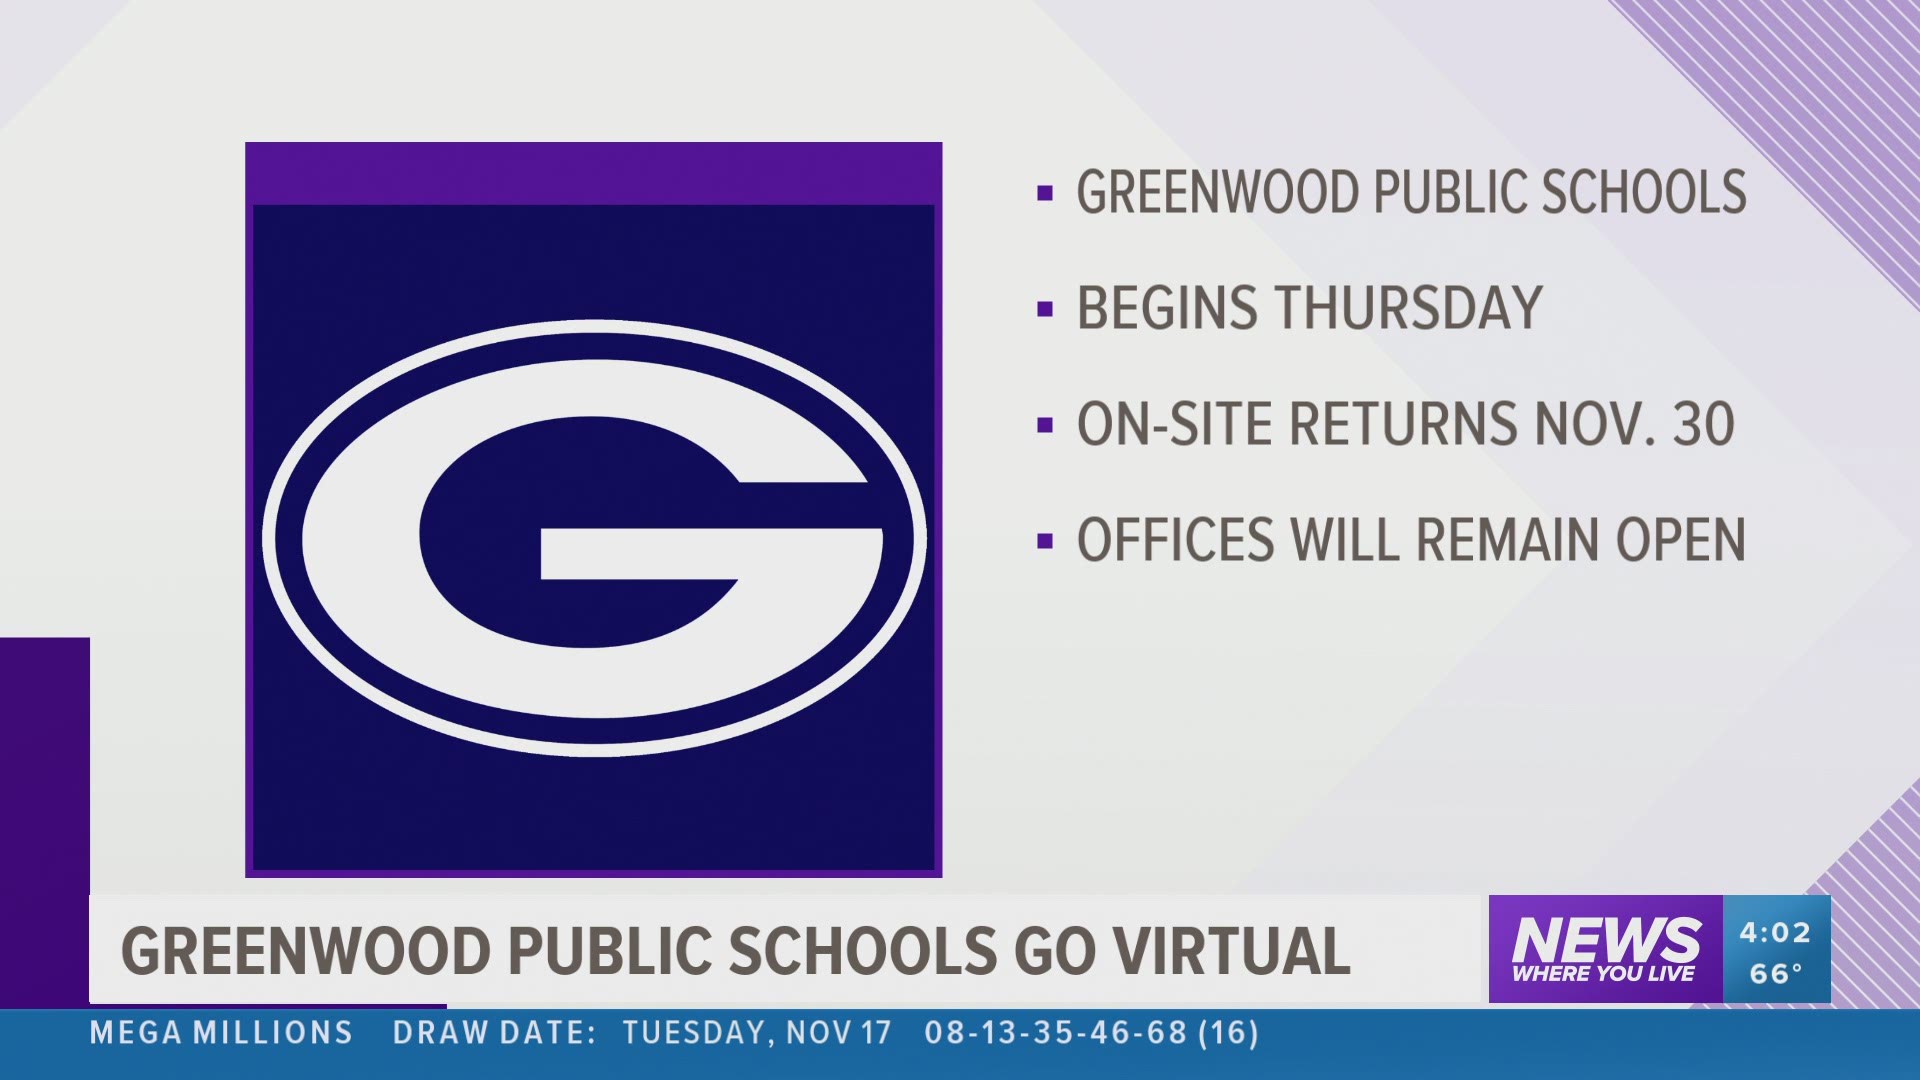 Greenwood Public Schools go virtual due to COVID-19